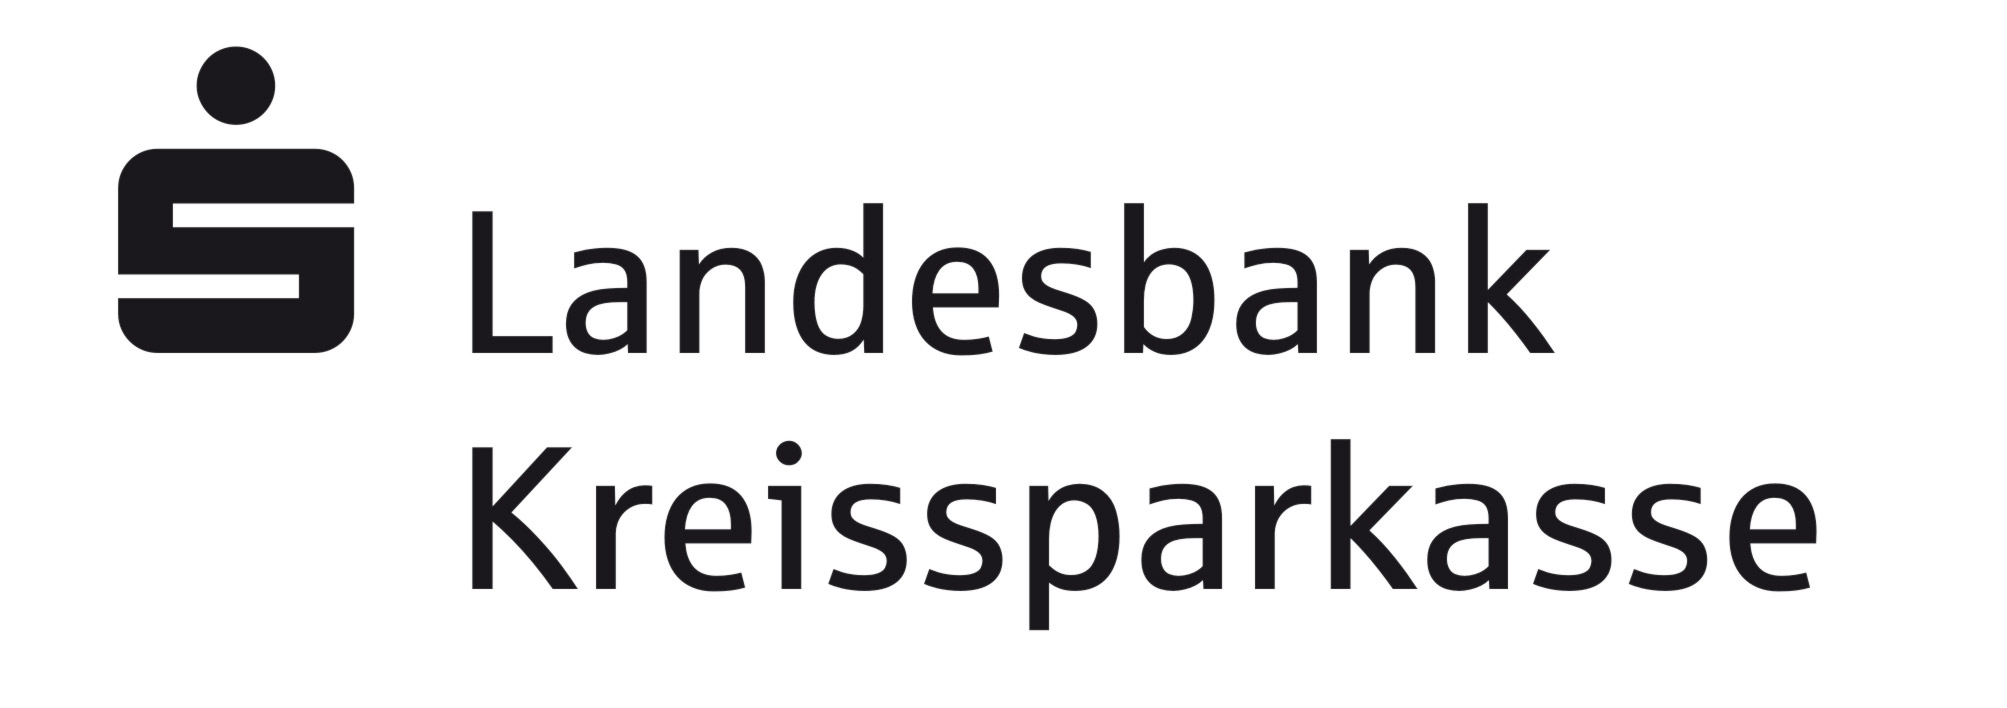 14-01 Kreissparkasse-Logo-2